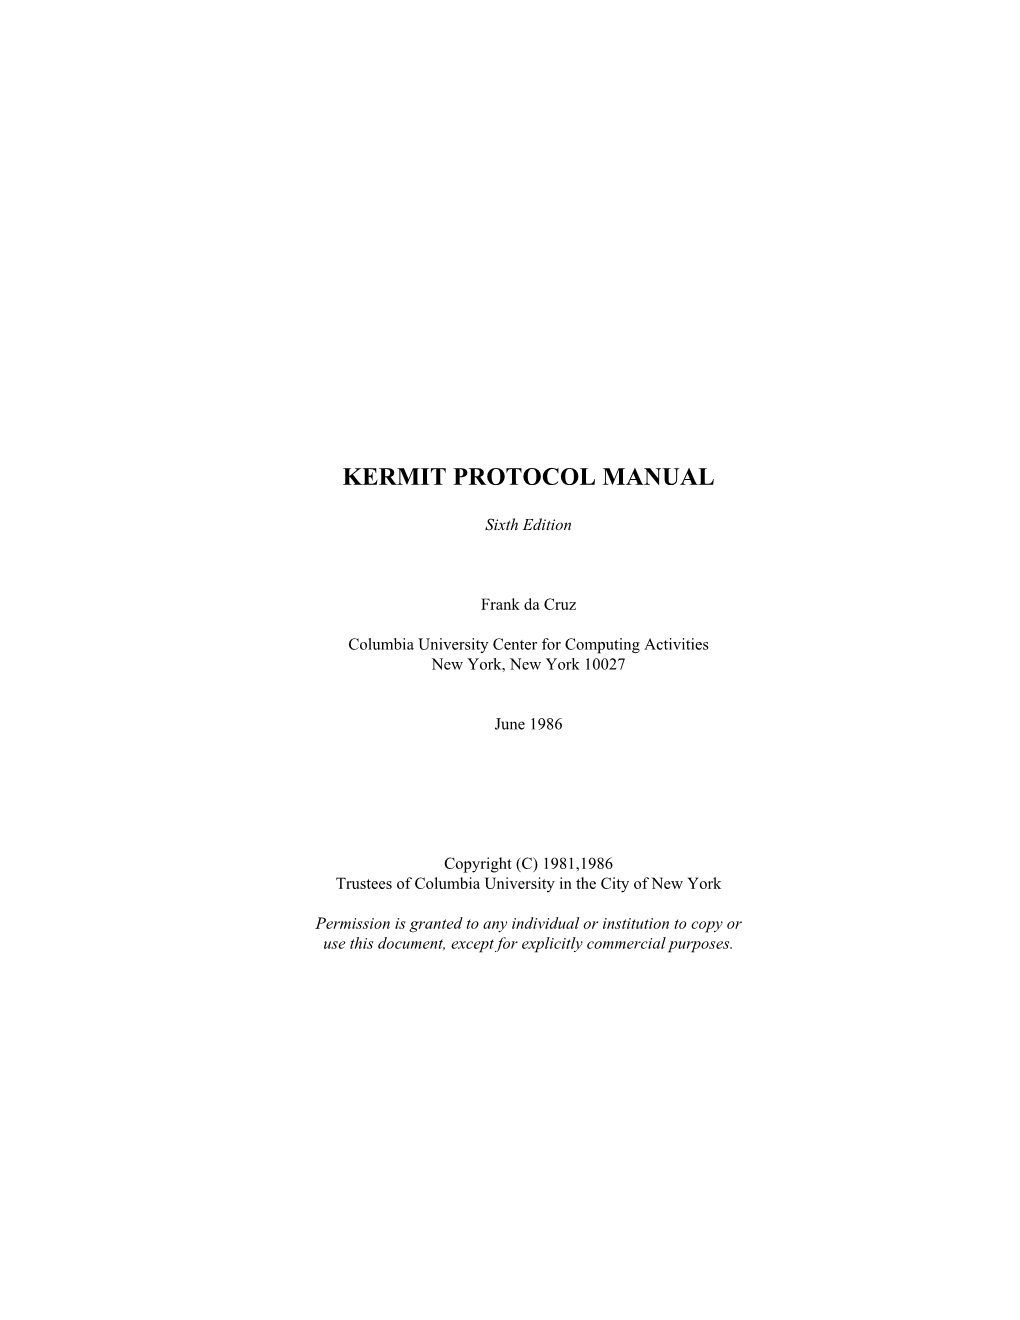 Kermit Protocol Manual